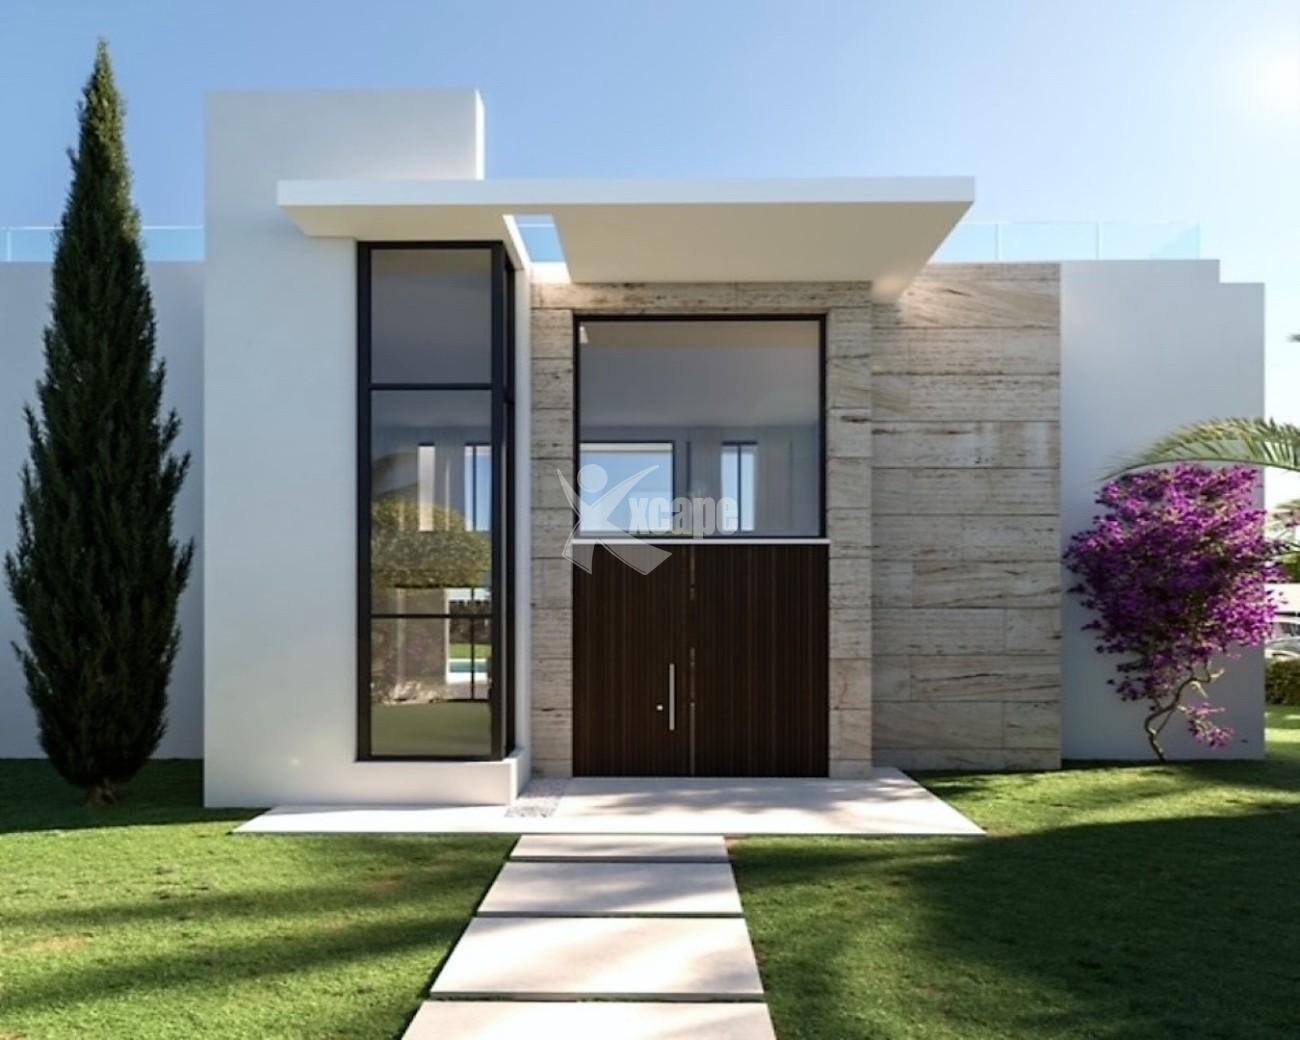 New Modern Villas Estepona East (3)